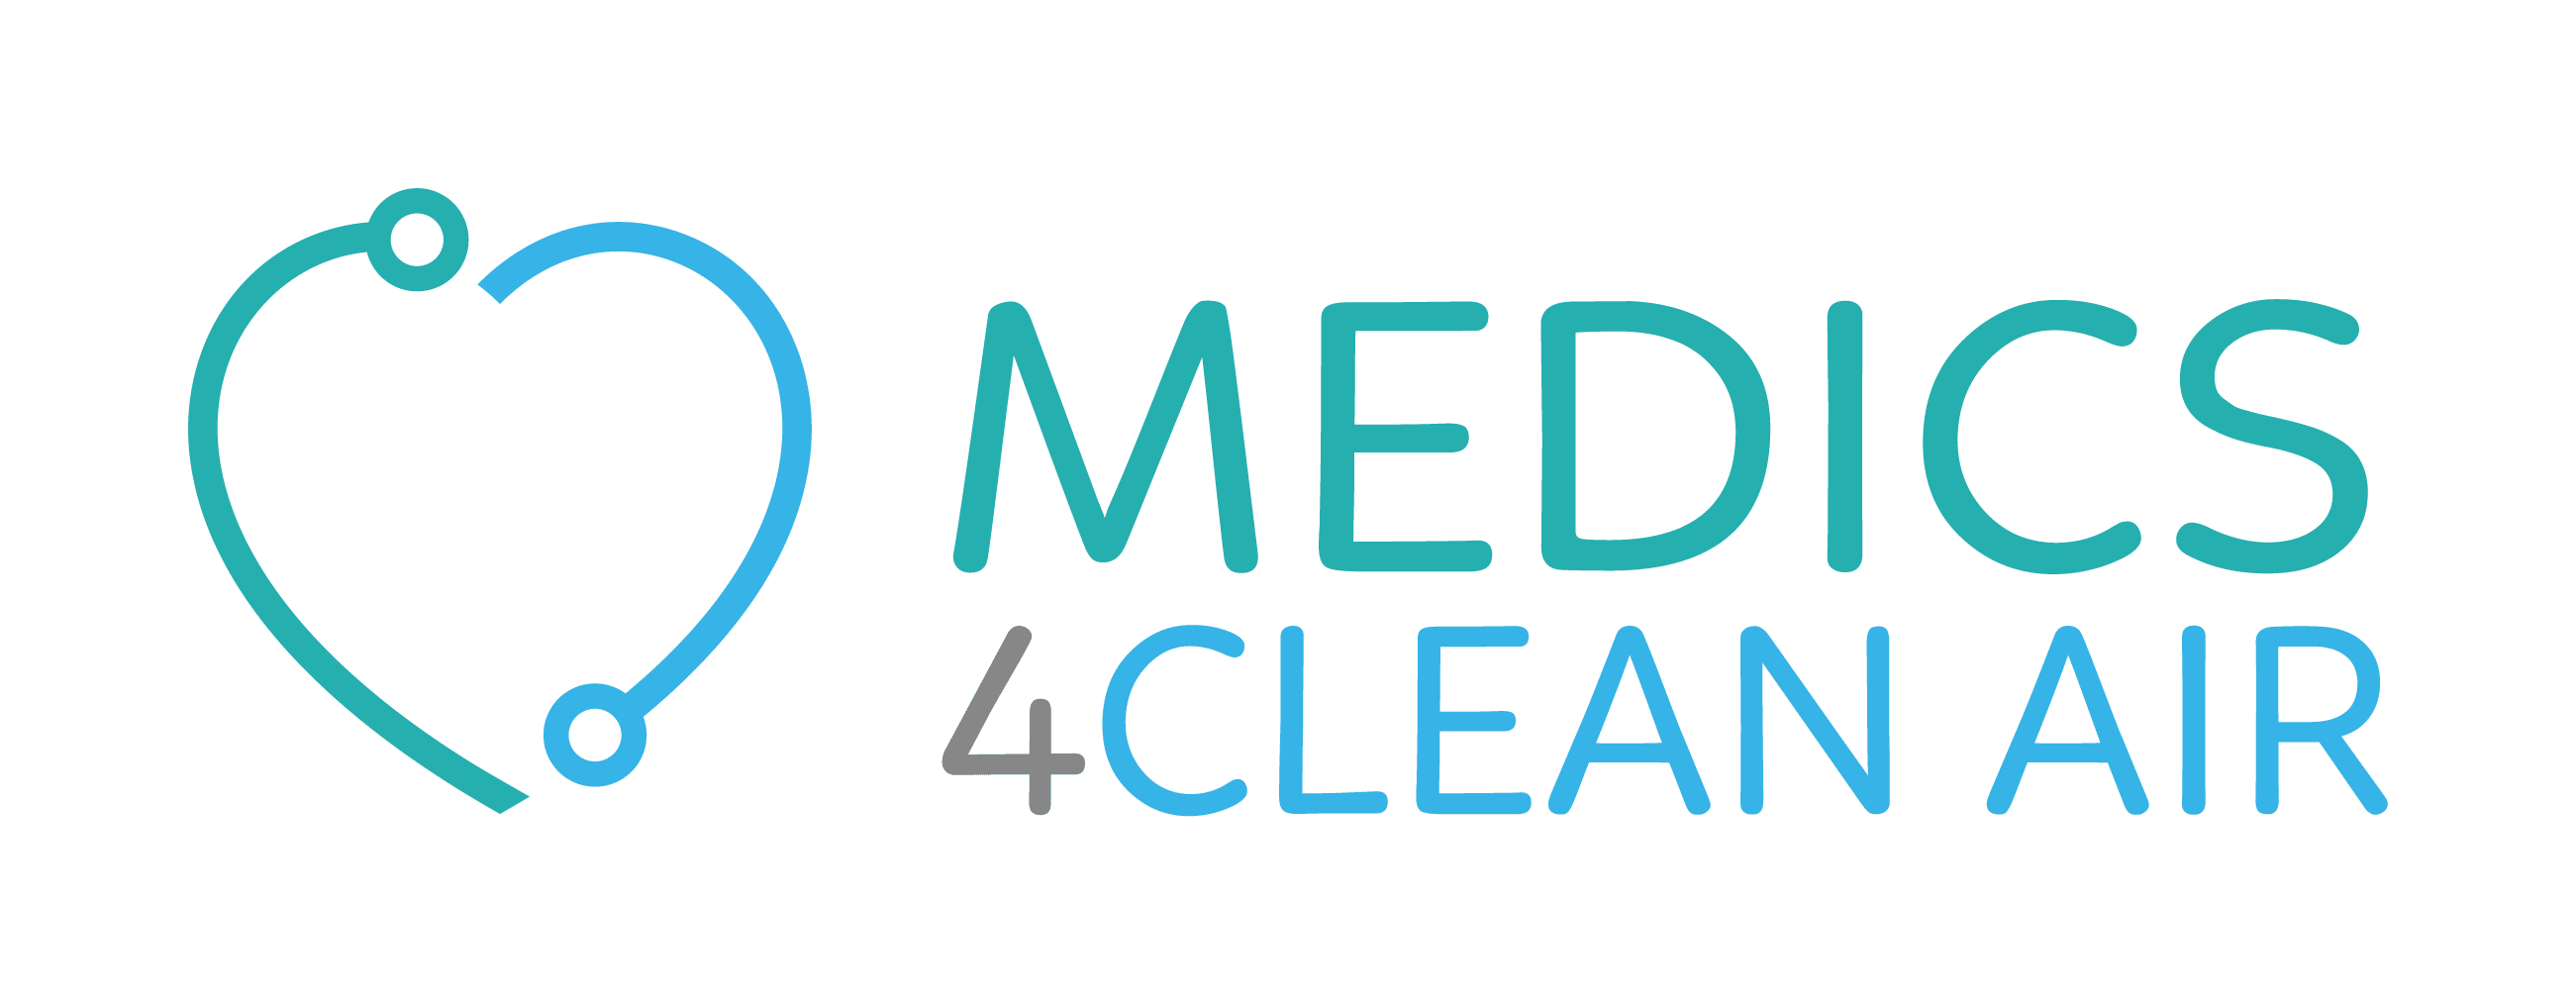 medics4cleanair logo